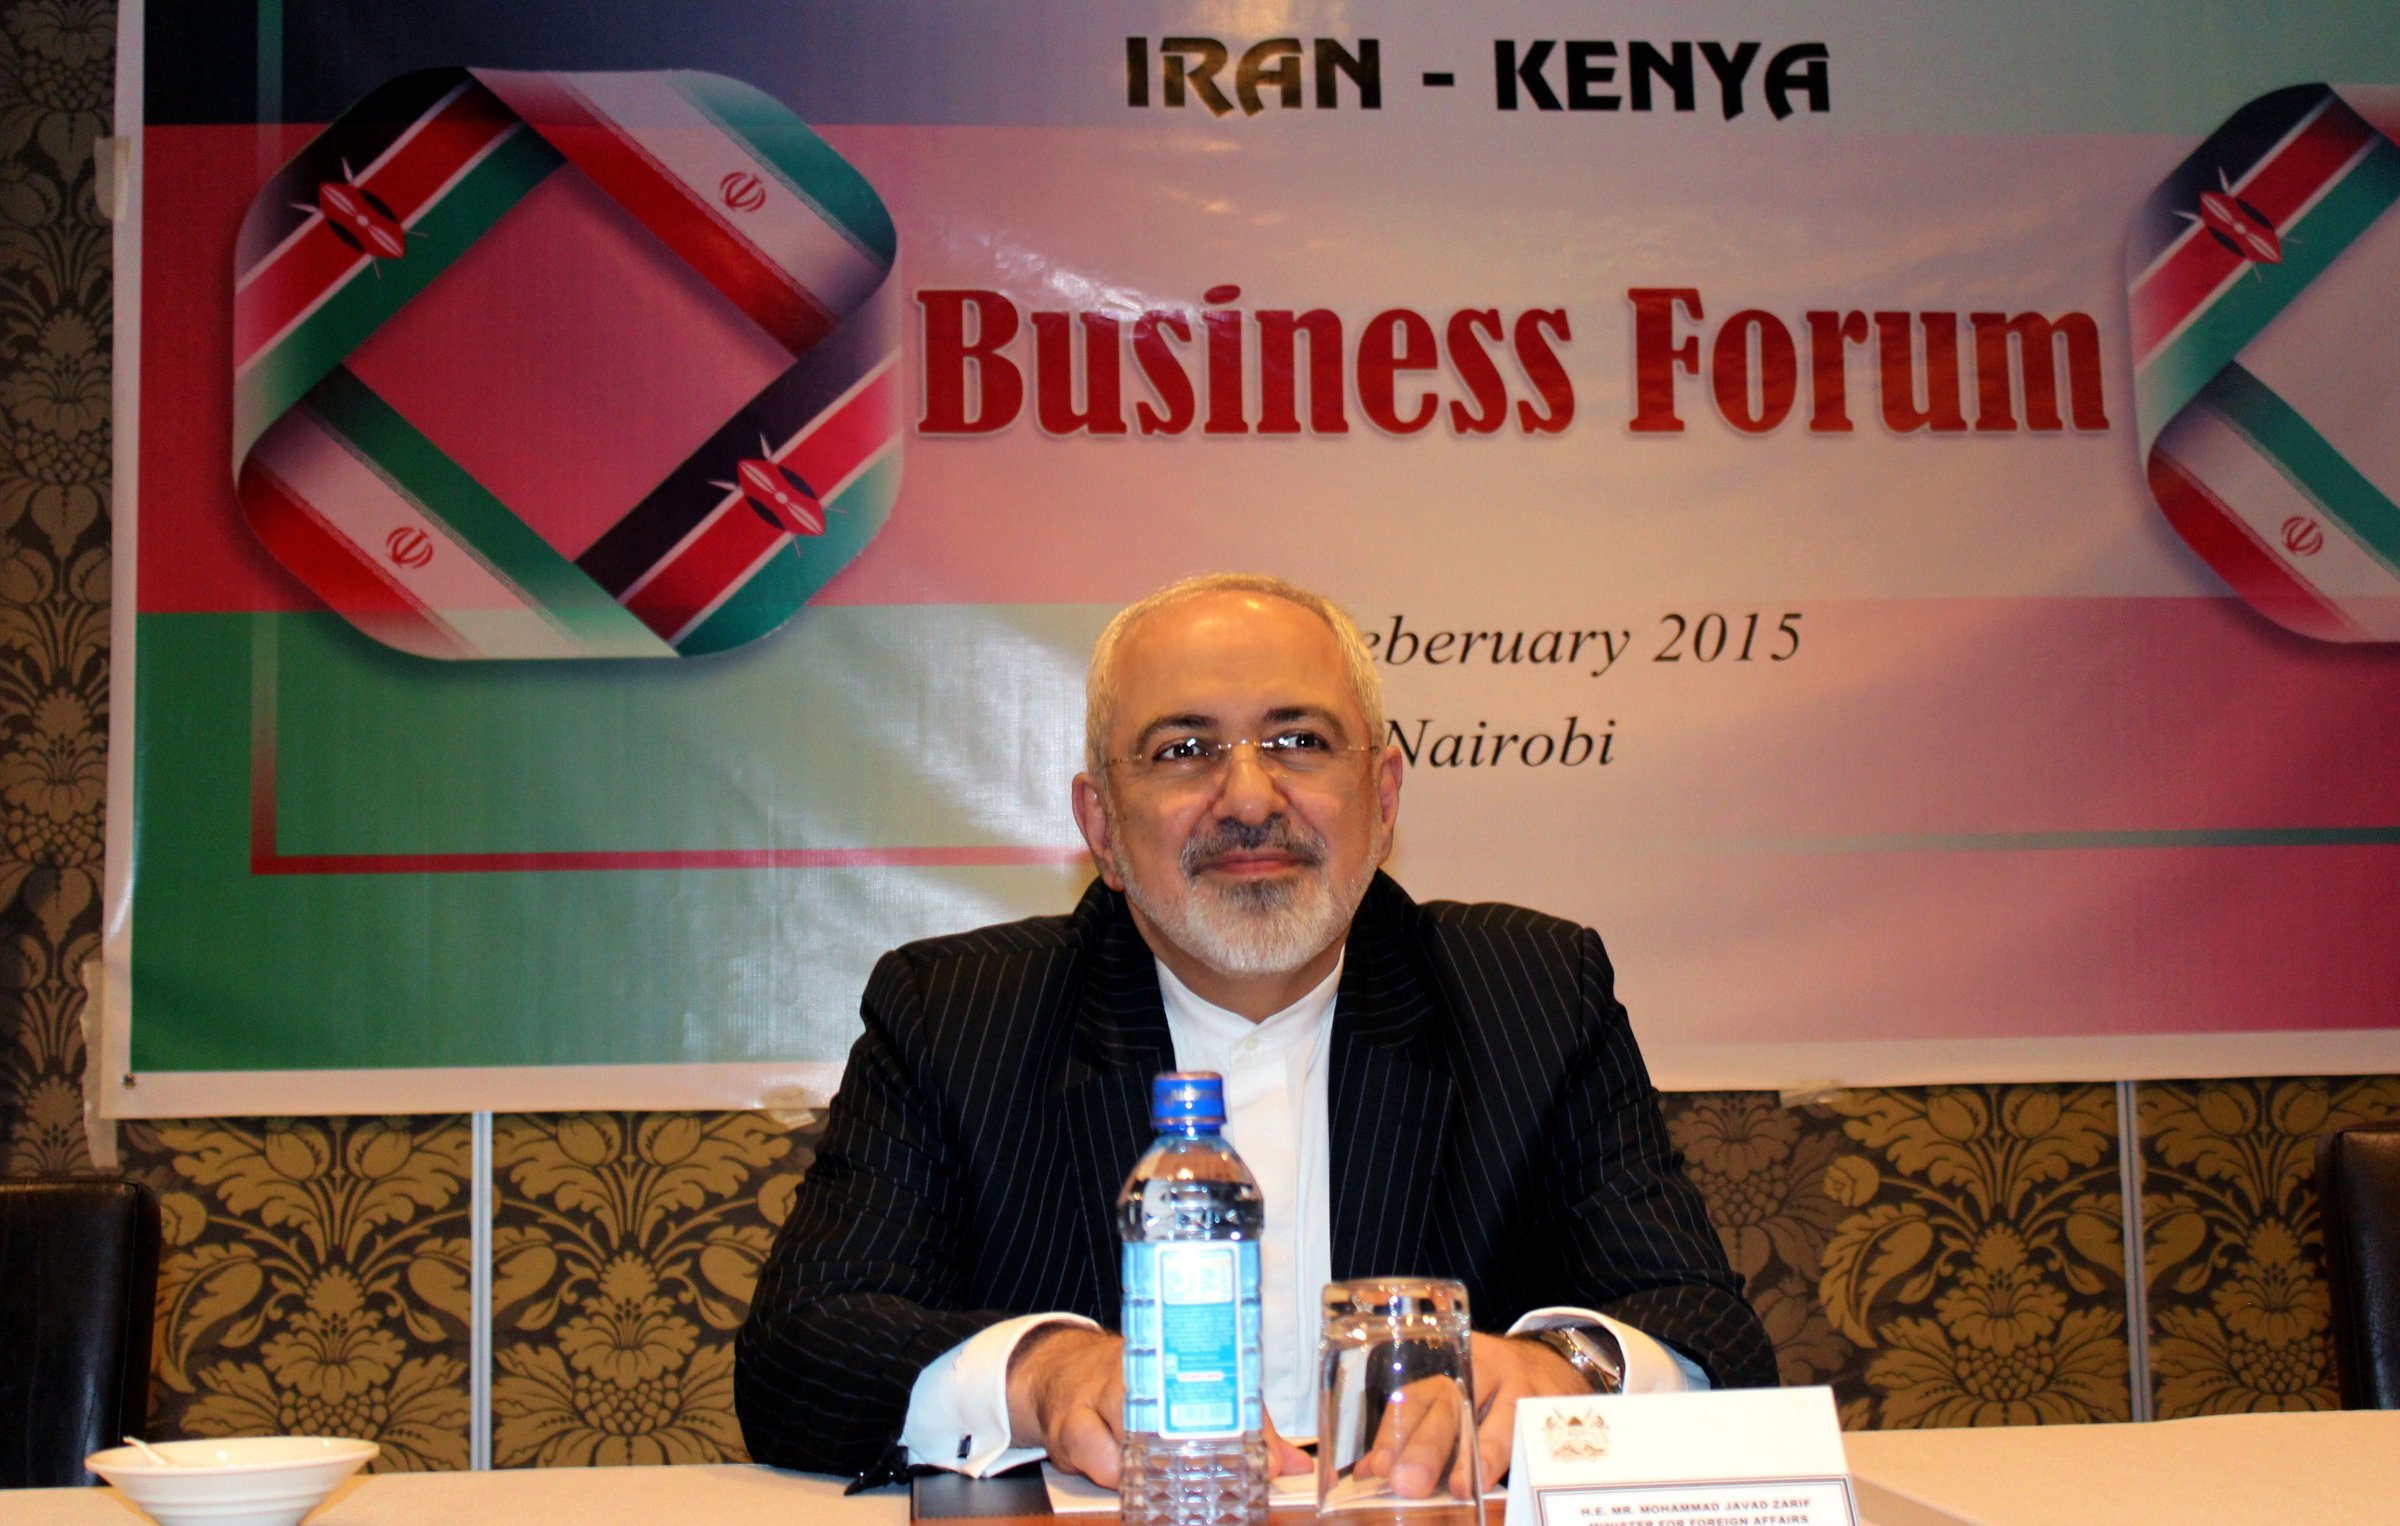 NAIROBI, KENYA - FEBRUARY 02: Iranian Foreign Minister Mohammad Javad Zarif attends Iran-Kenya business forum in Nairobi, Kenya o February 02, 2015. (Photo by Stringer/Anadolu Agency/Getty Images)